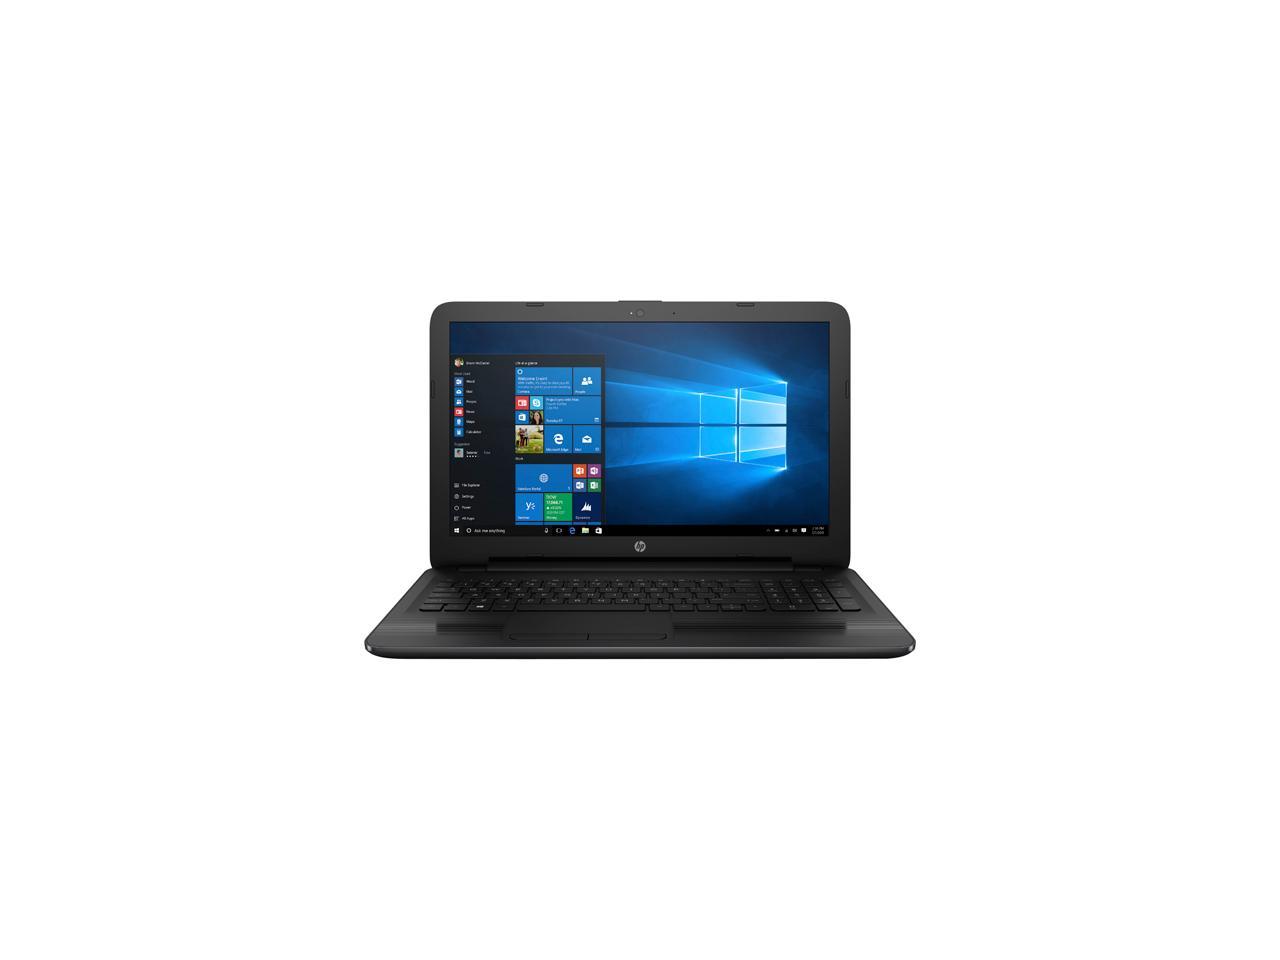 HP Laptop 250 G5 250 G5 (X9U07UT#ABA) Intel Core i5 6th Gen 6200U (2.30 GHz) 8 GB Memory 256 GB SSD Intel HD Graphics 520 15.6" Windows 10 Home 64-Bit